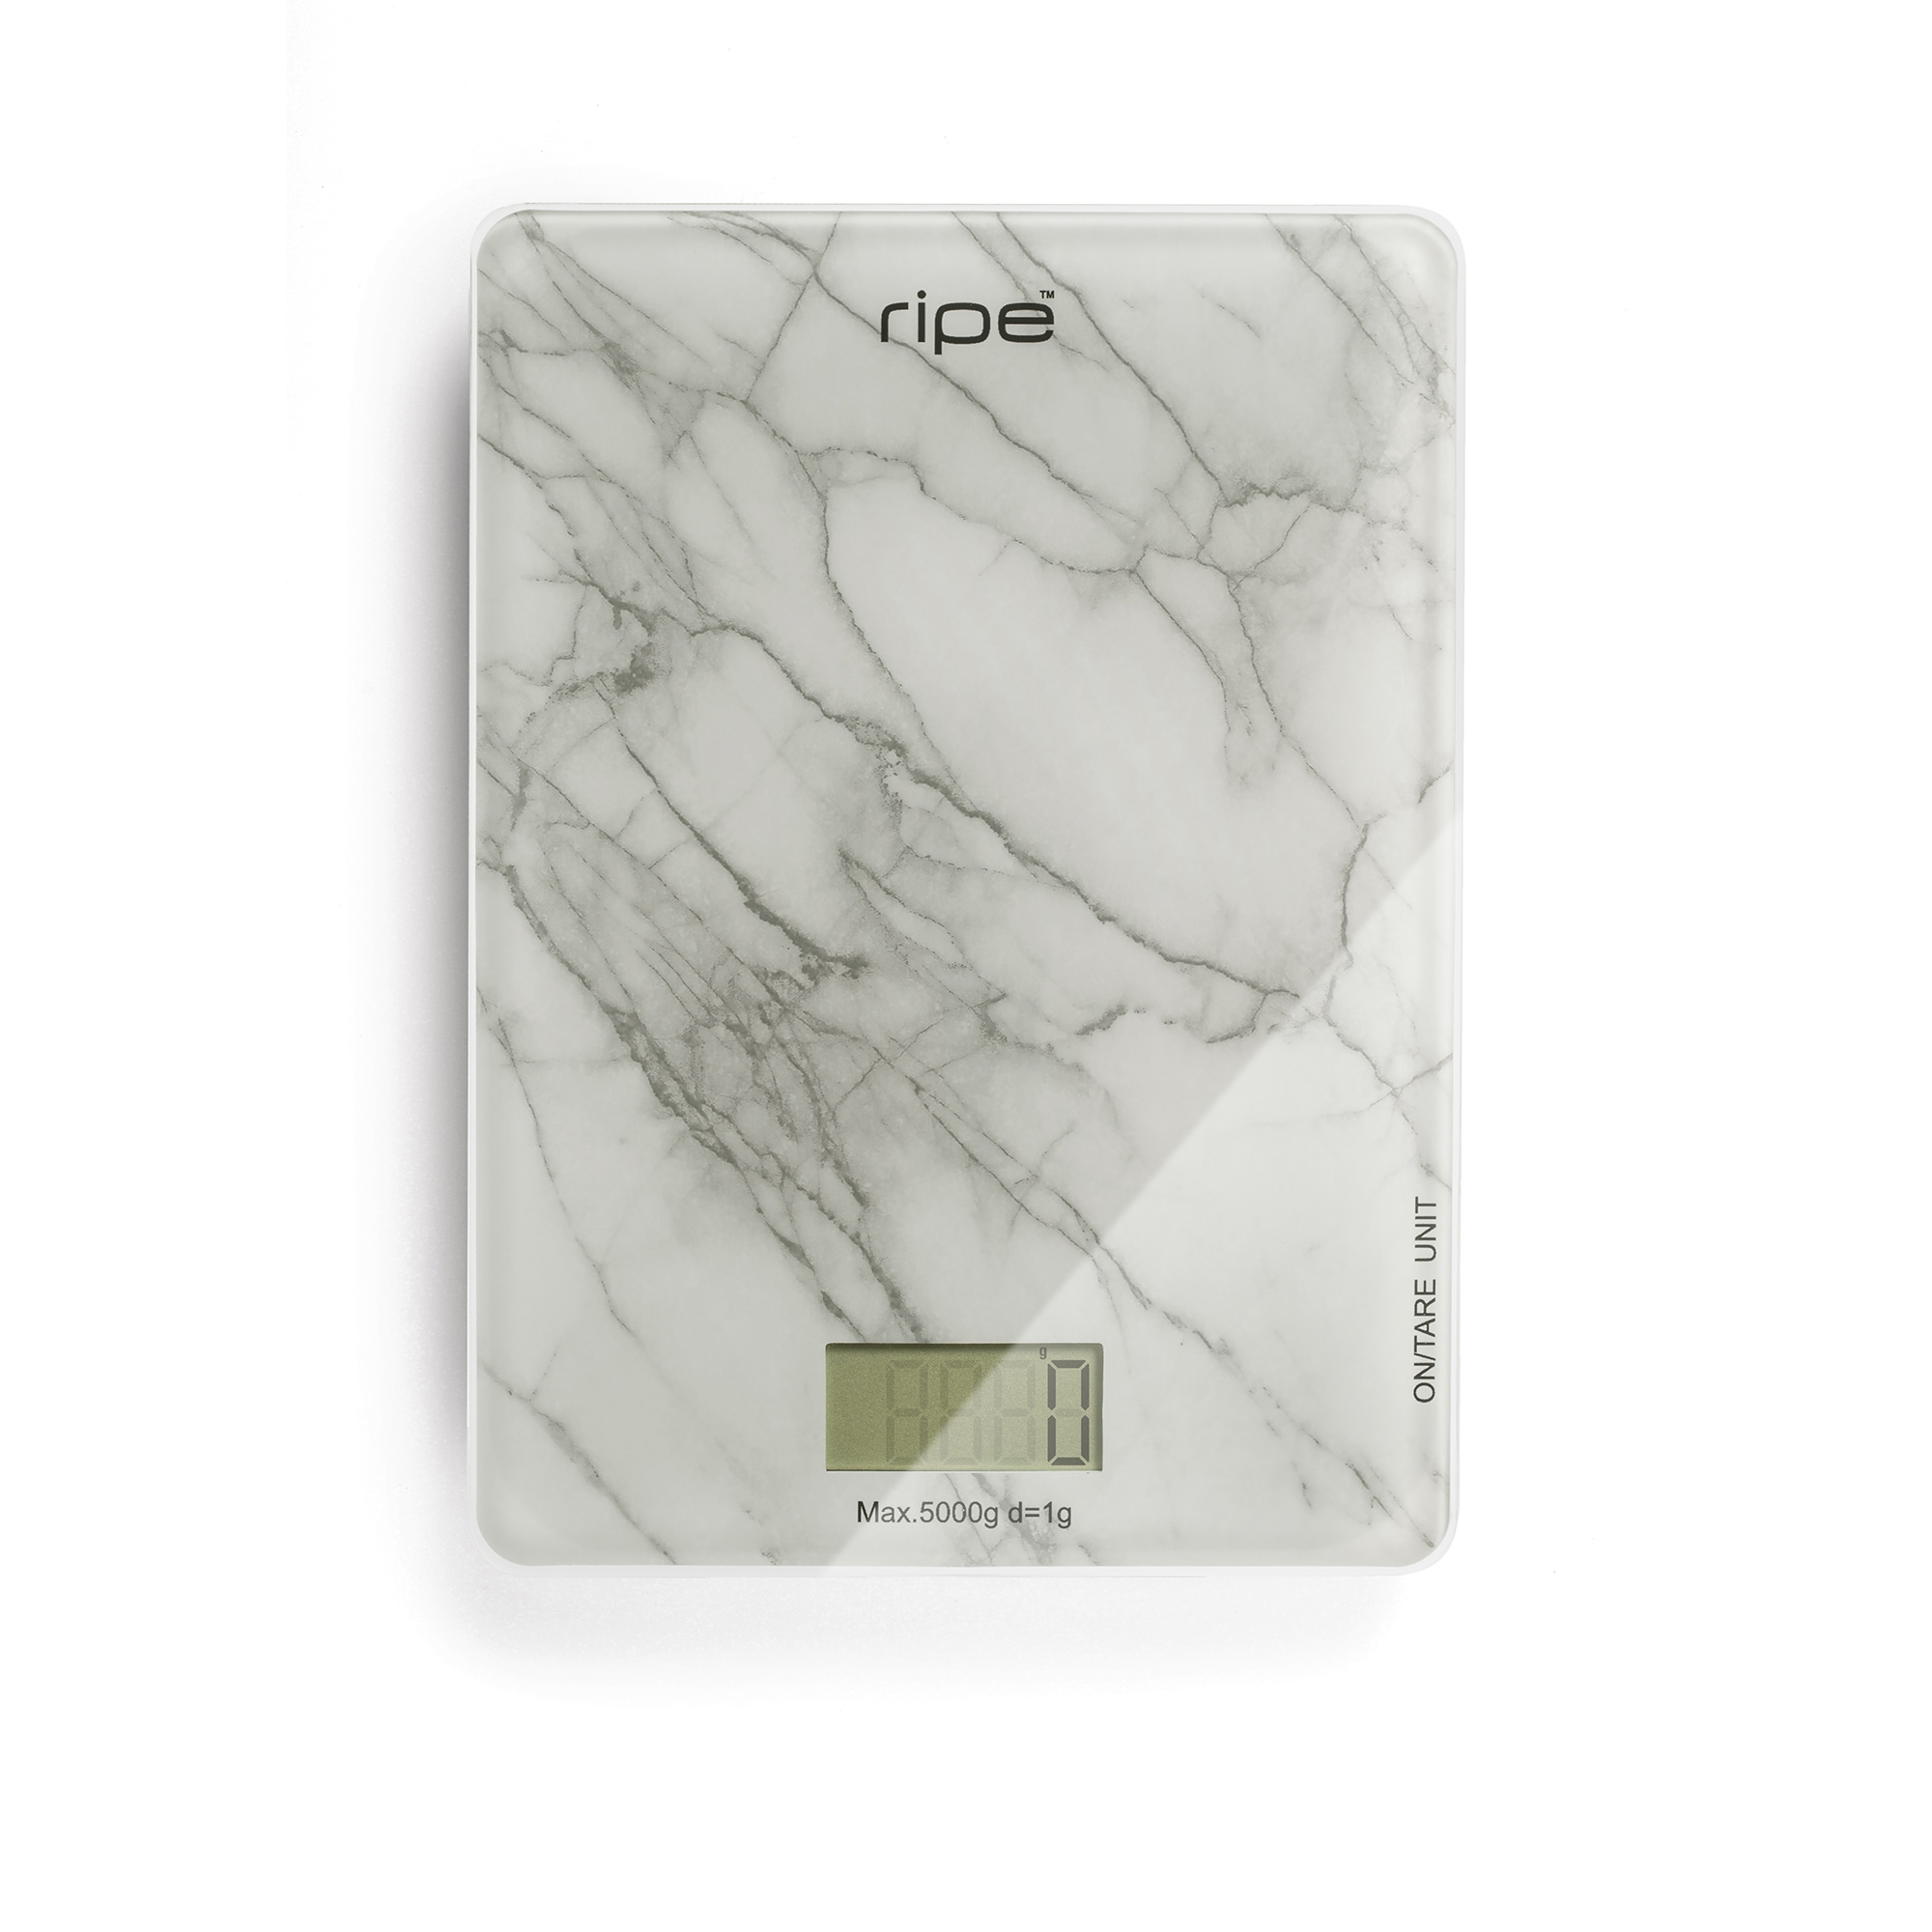 Ripe Digital Kitchen Scale 5kg White Marble Image 2